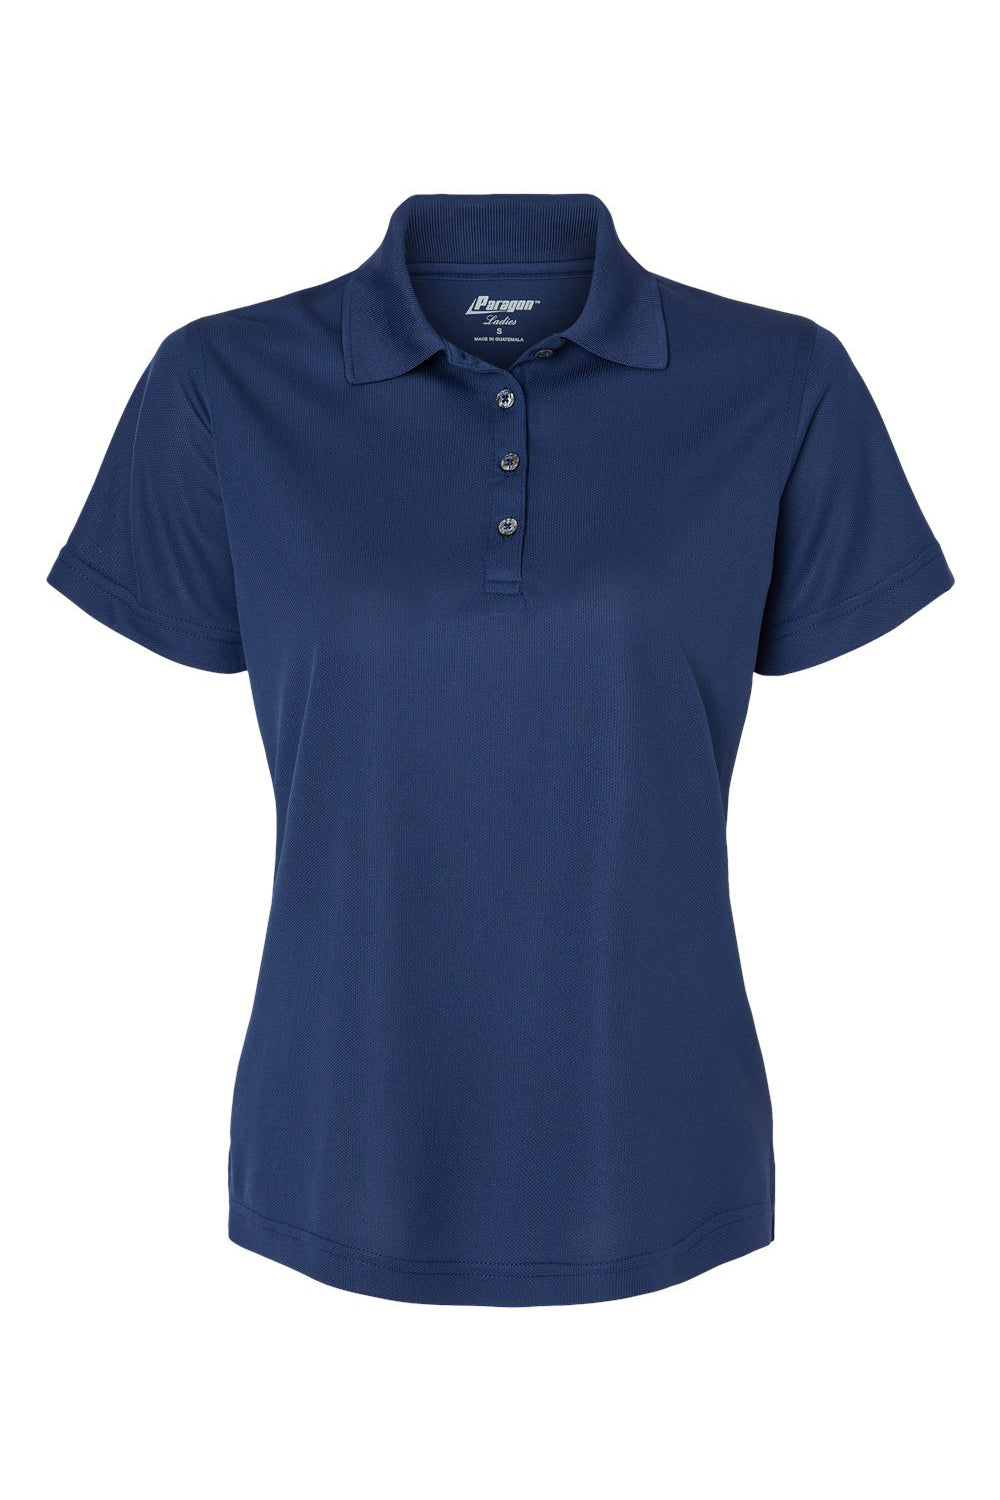 Paragon 104 Womens Saratoga Performance Mini Mesh Short Sleeve Polo Shirt Navy Blue Flat Front